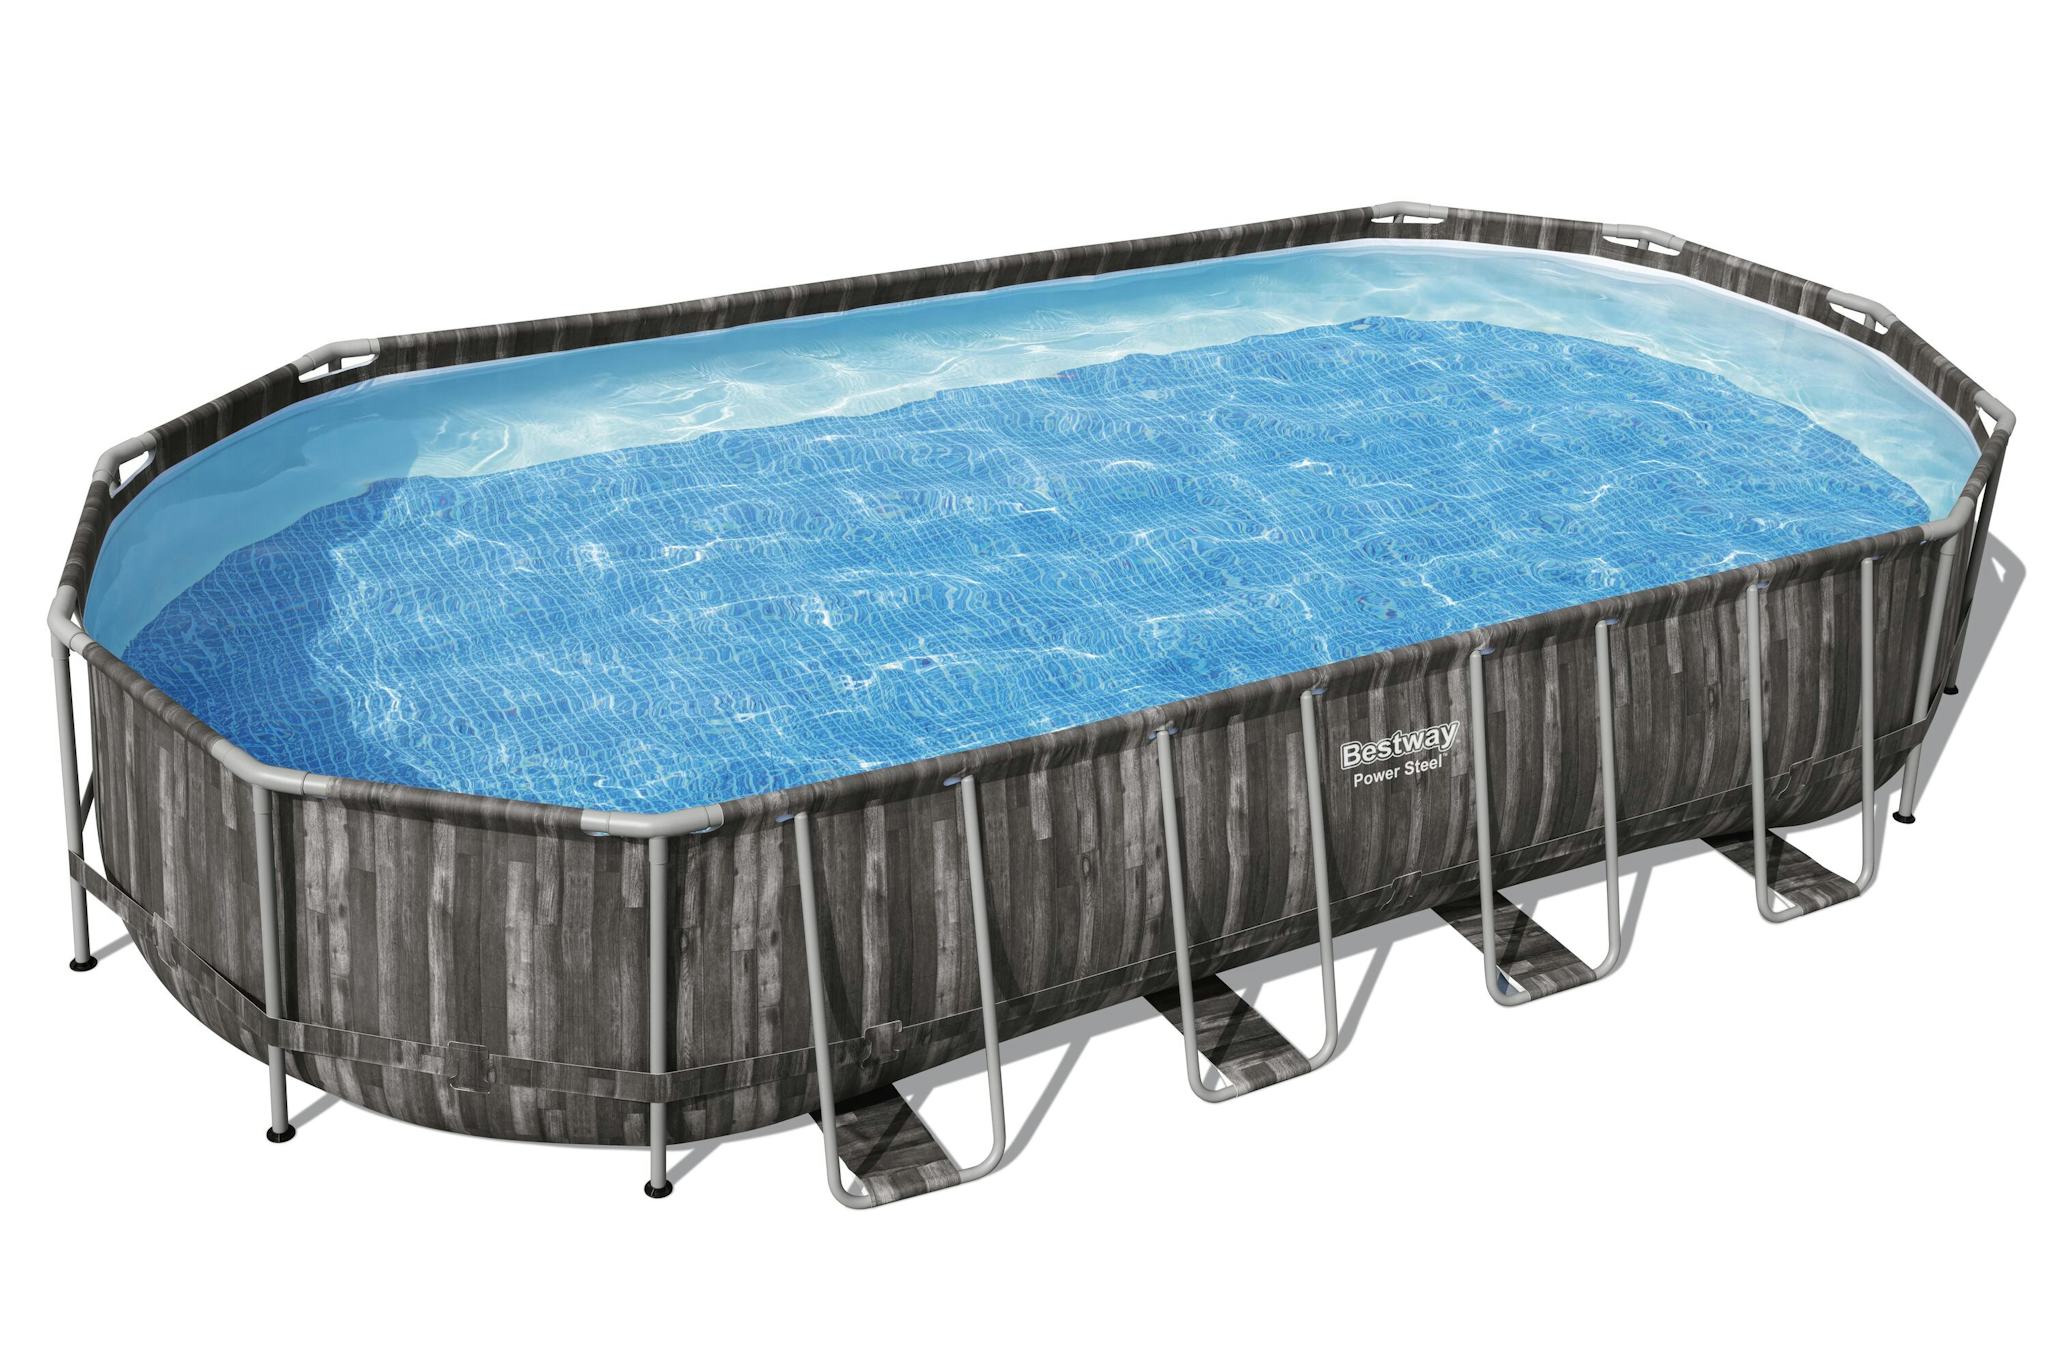 Piscine fuori terra Set piscina fuori terra ovale Power Steel - 732x366x122 cm effetto legno scuro Bestway 2